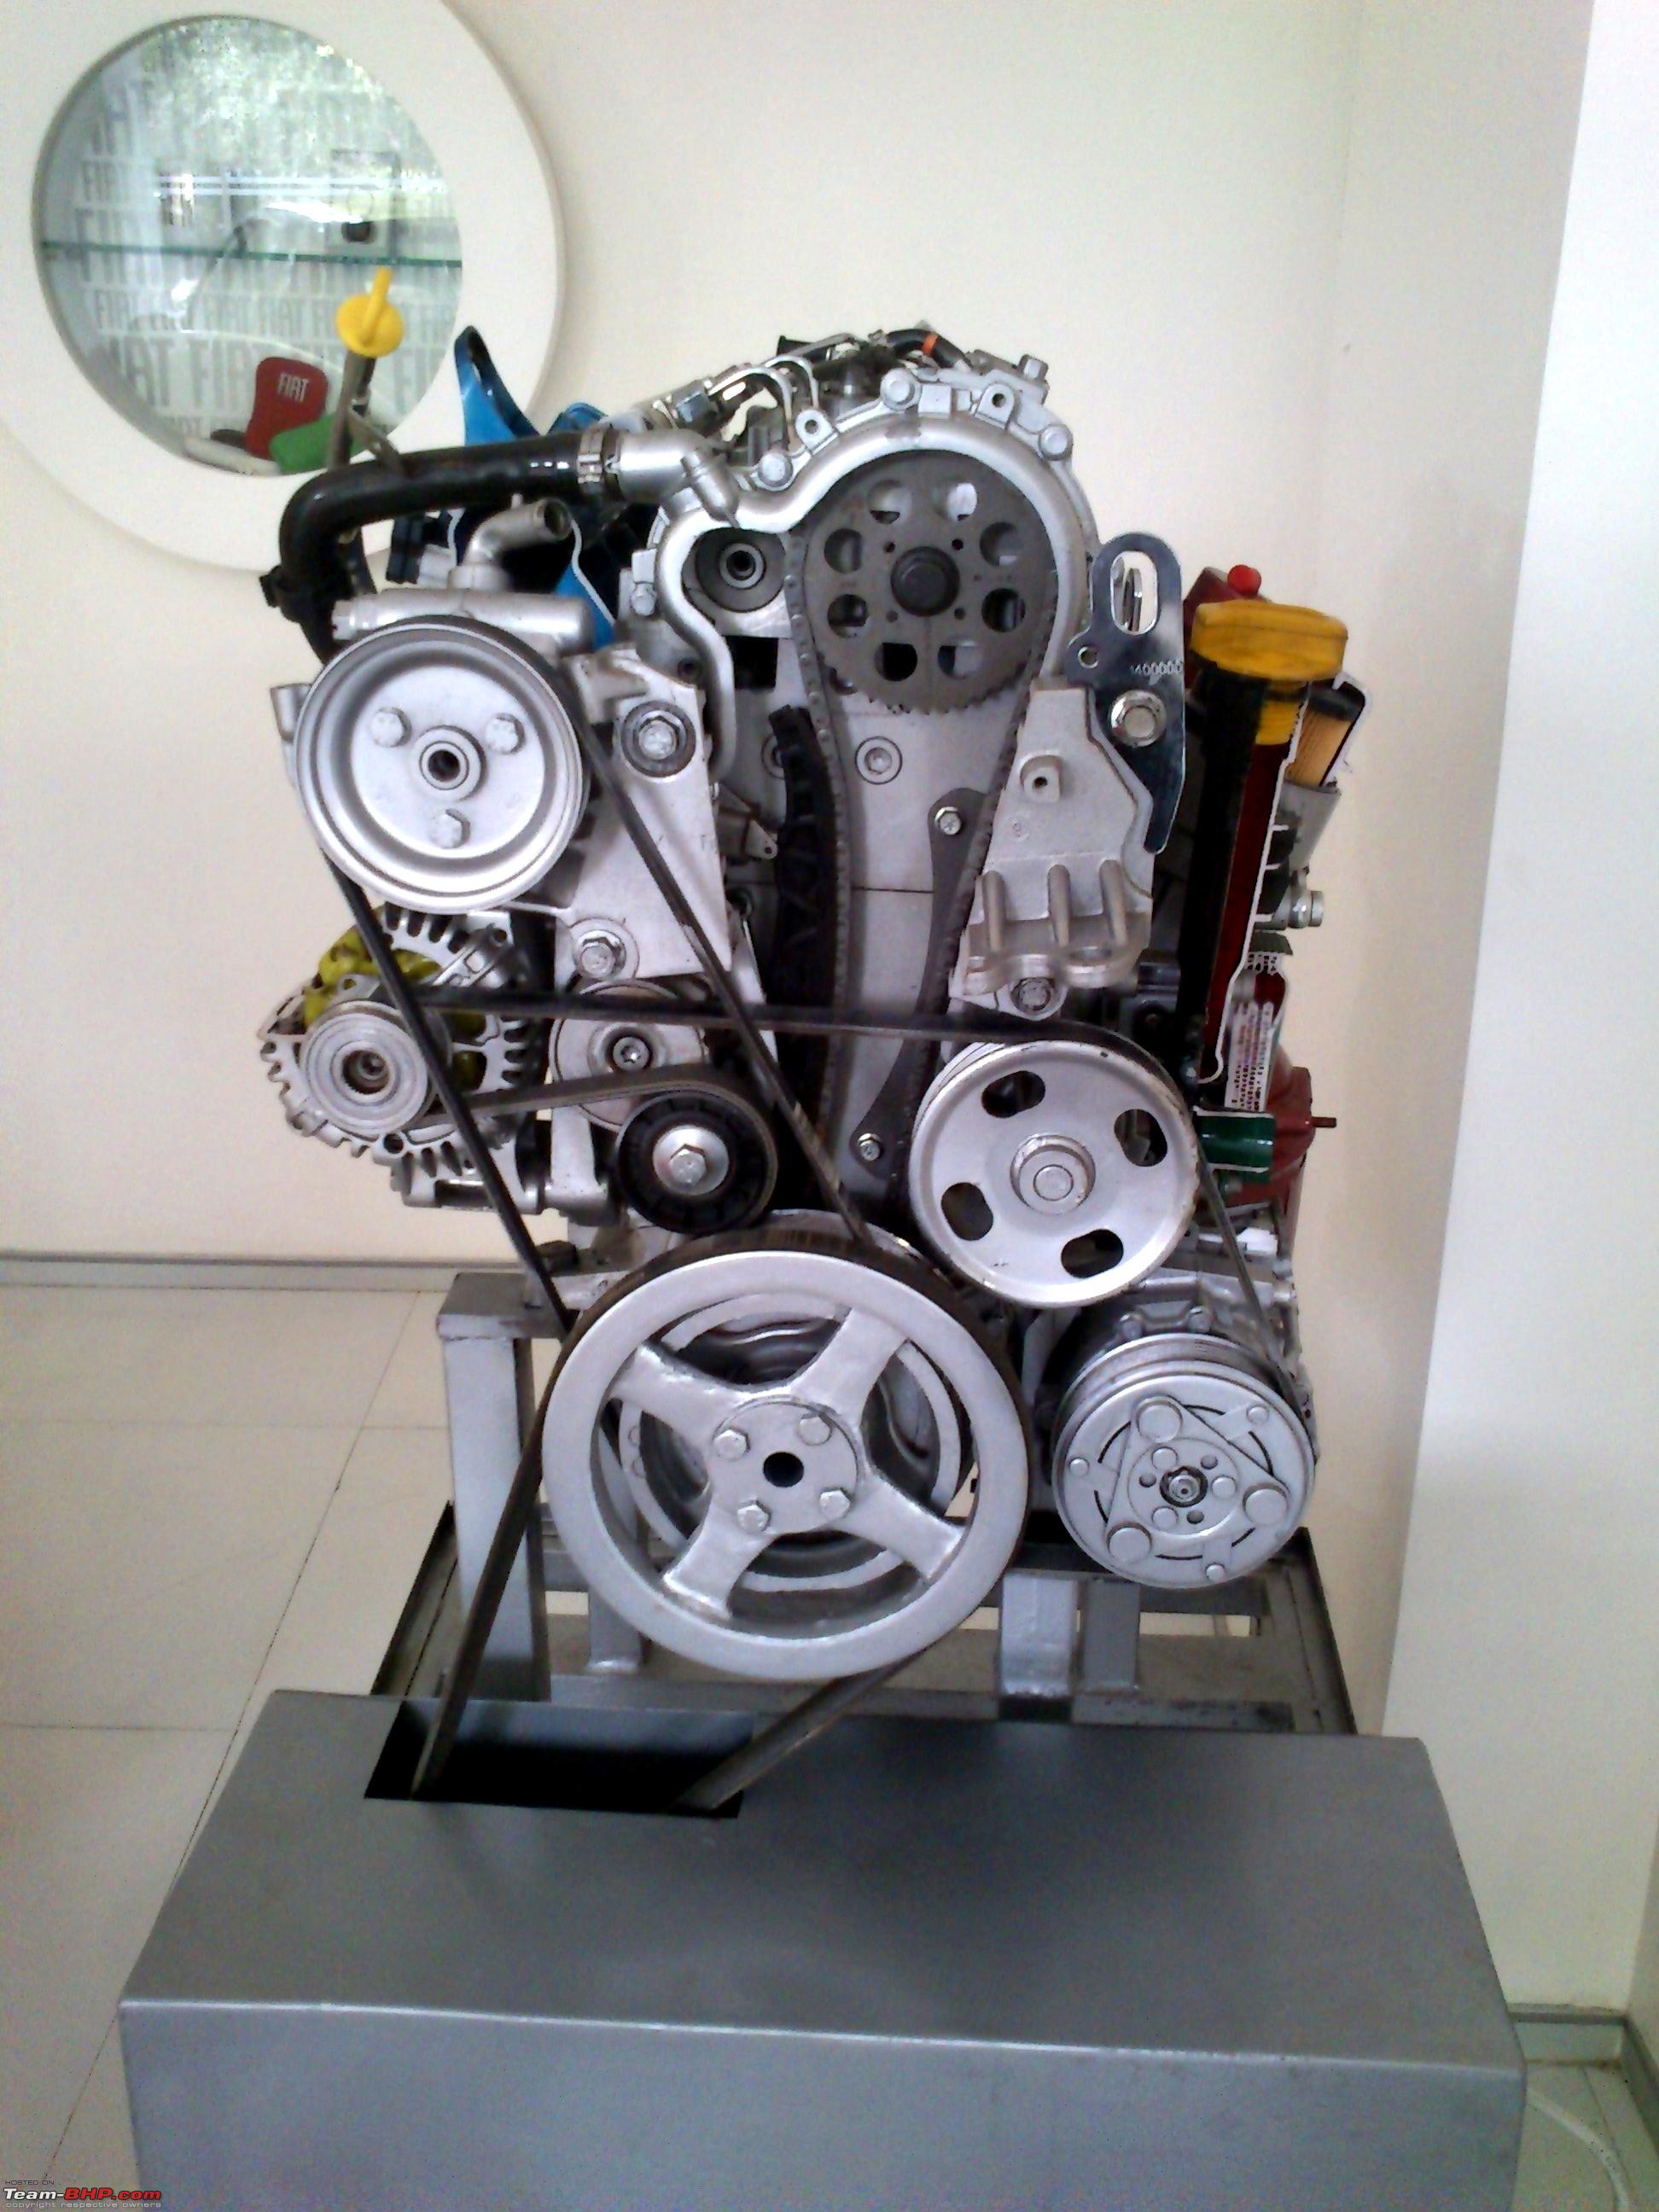 Engine Pics The Fiat Multijet 1.3 90 VGT TeamBHP